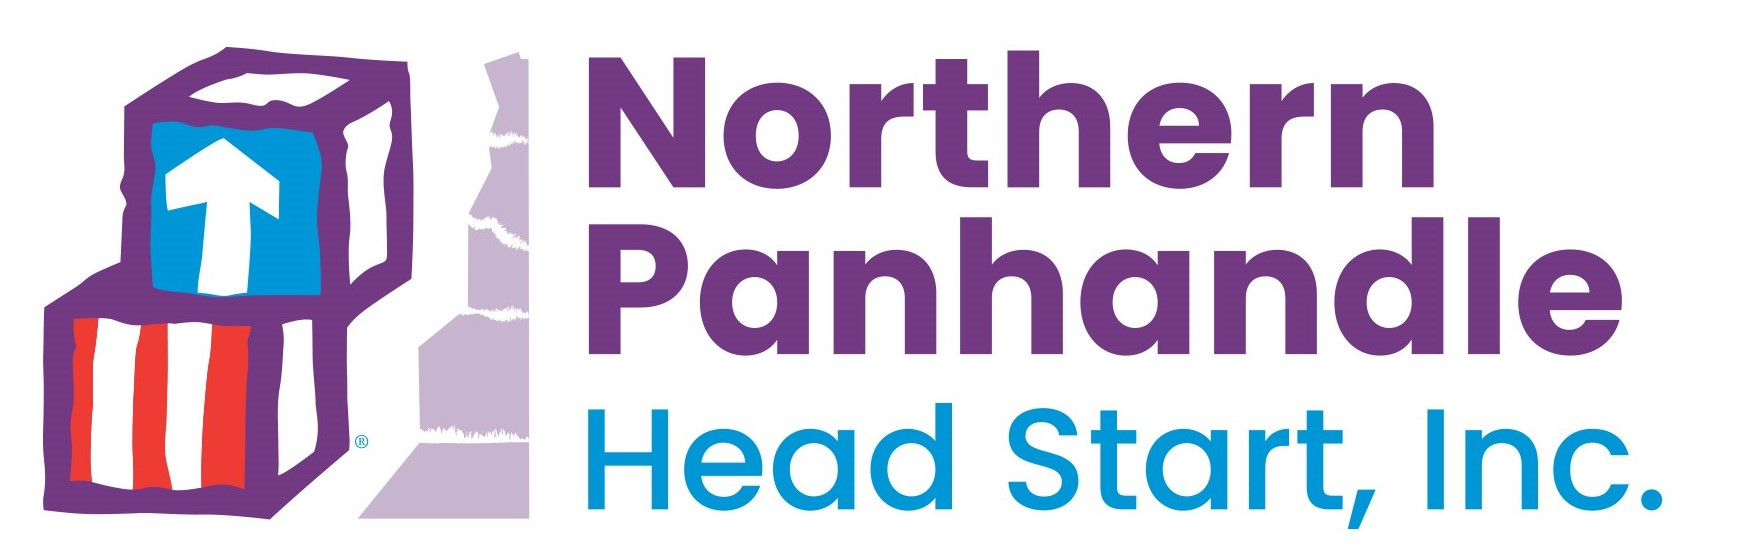 Northern Panhandle Head Start, Inc's Logo